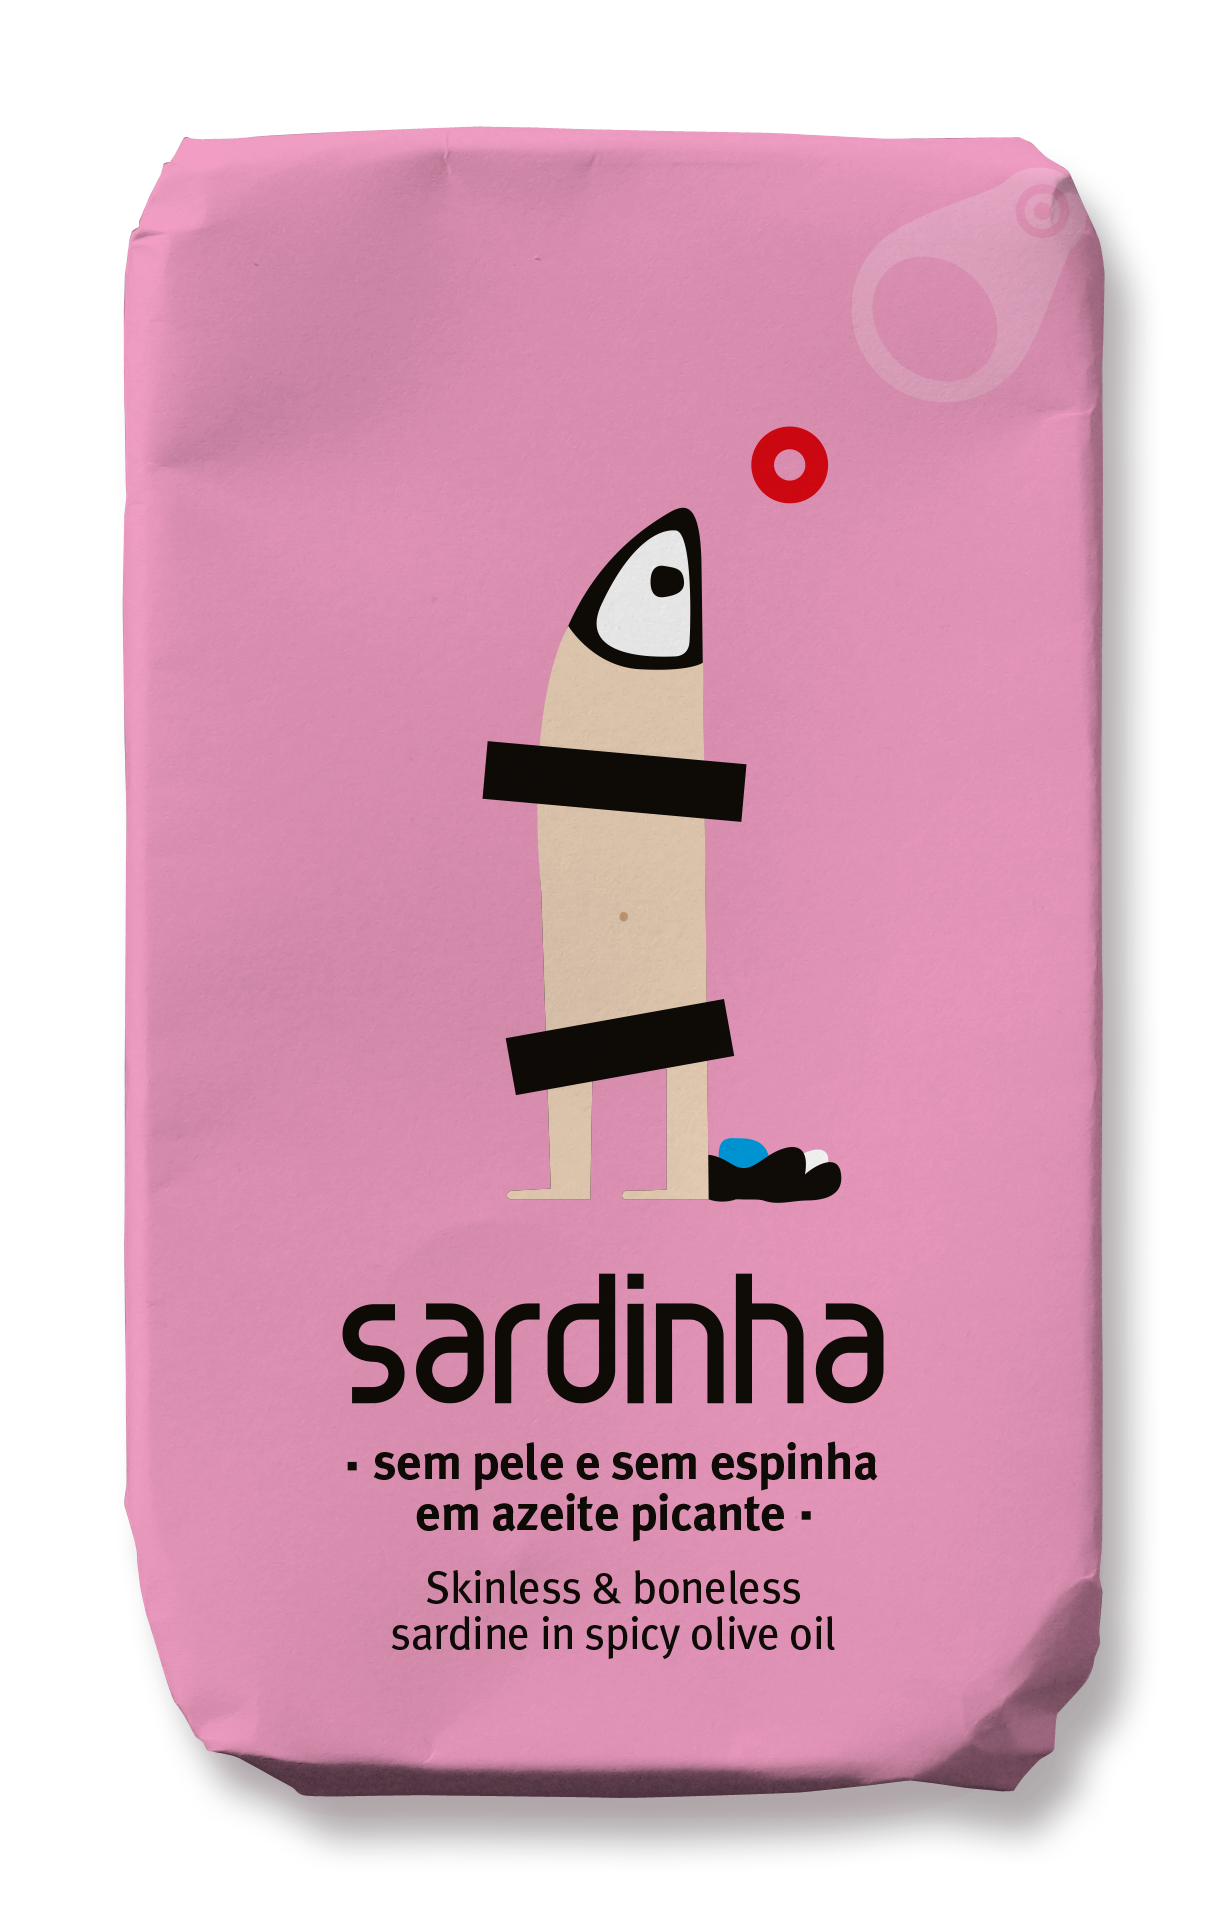 Sardinha - Skinless and boneless sardines in spicy olive oil